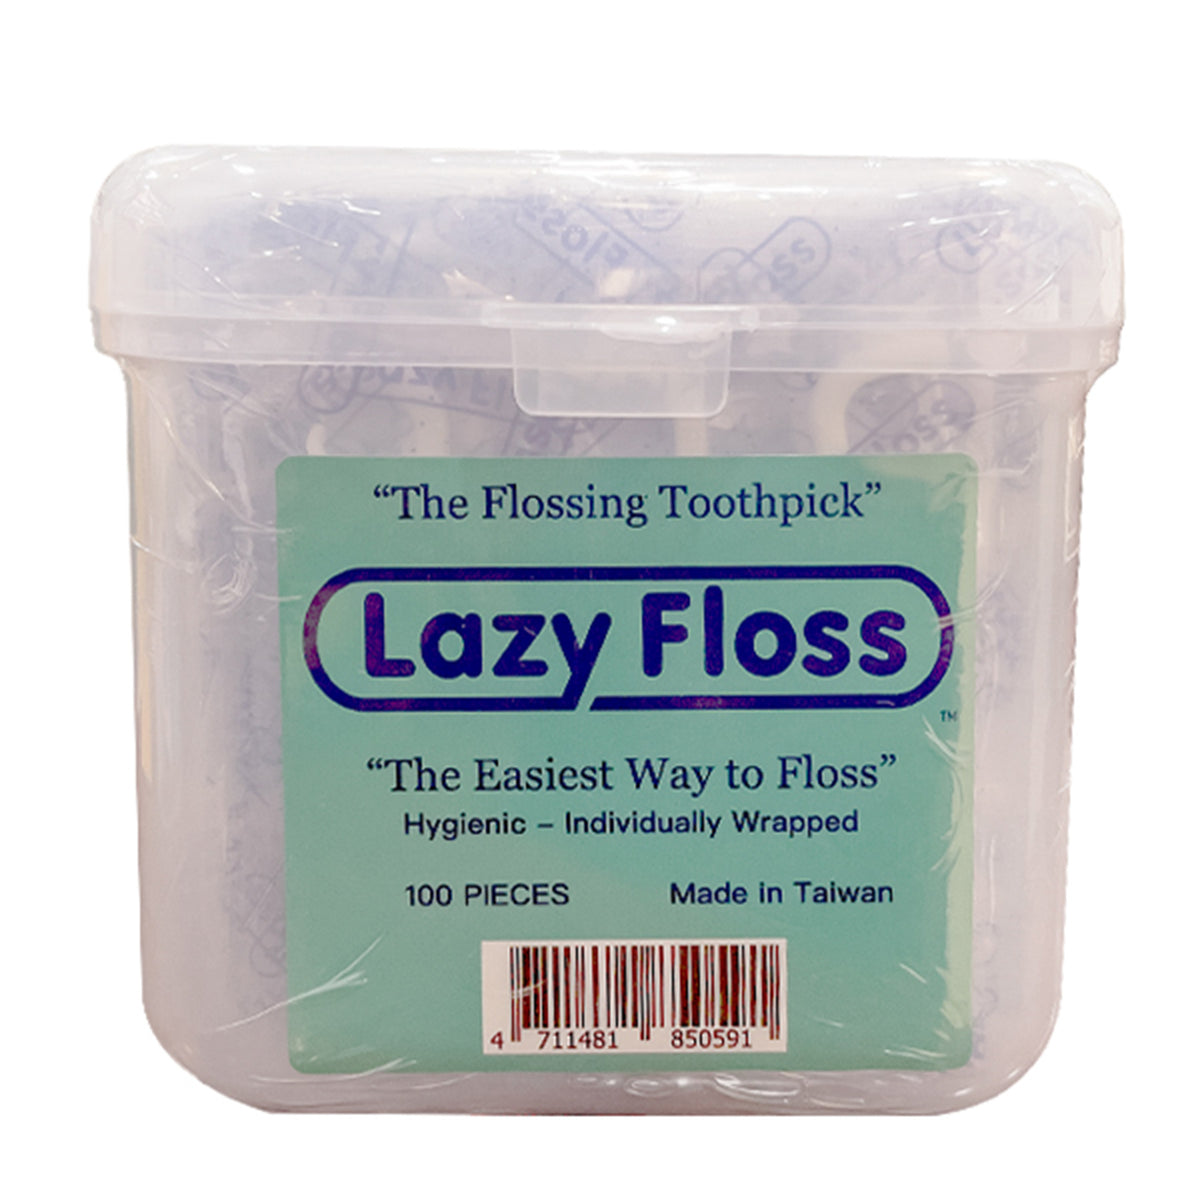 Lazy floss singly wrapped - 100 pcs